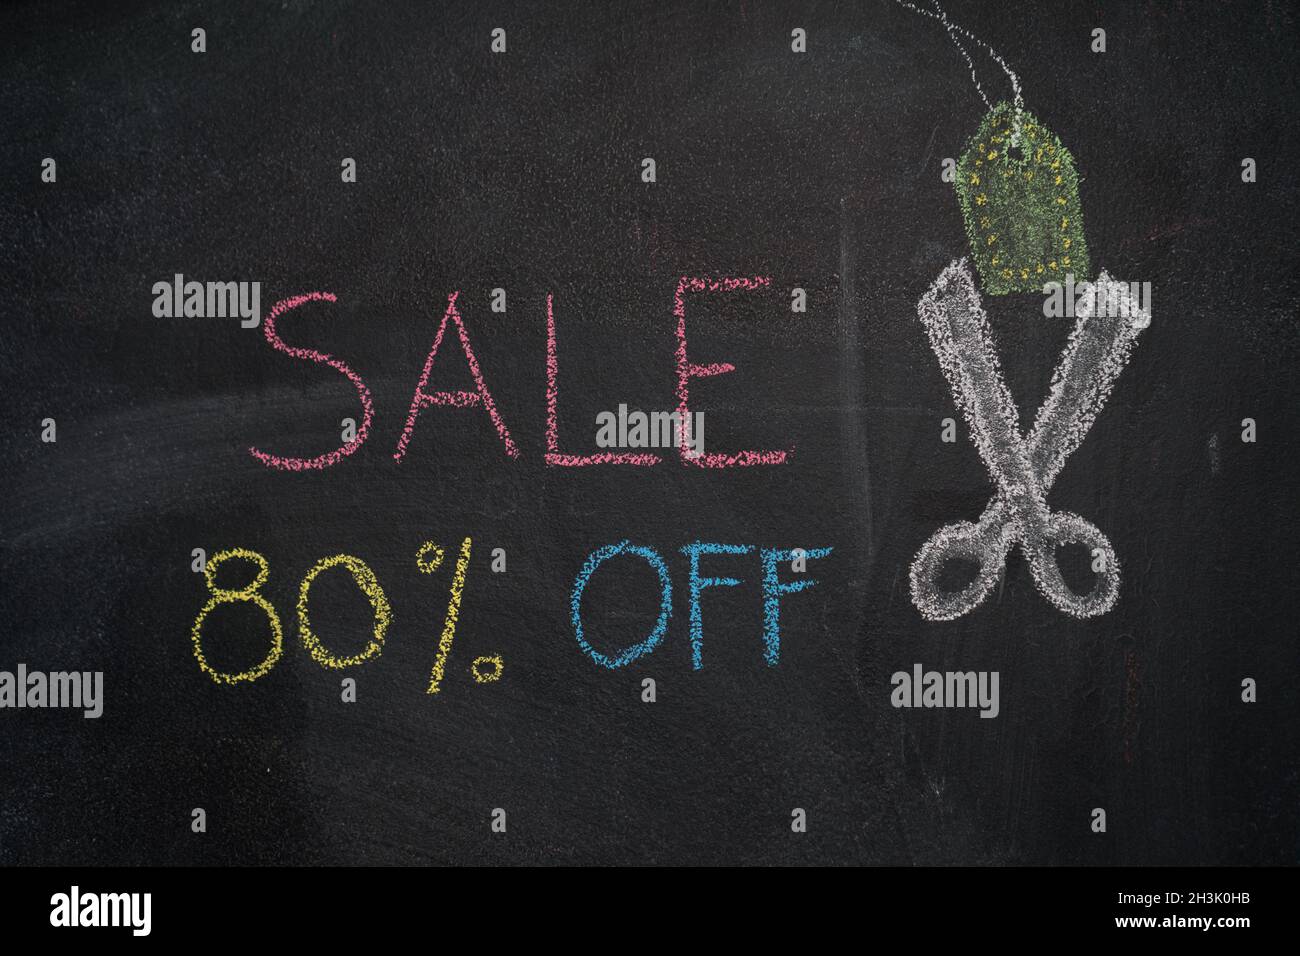 Sale 80% off on chalkboard Stock Photo